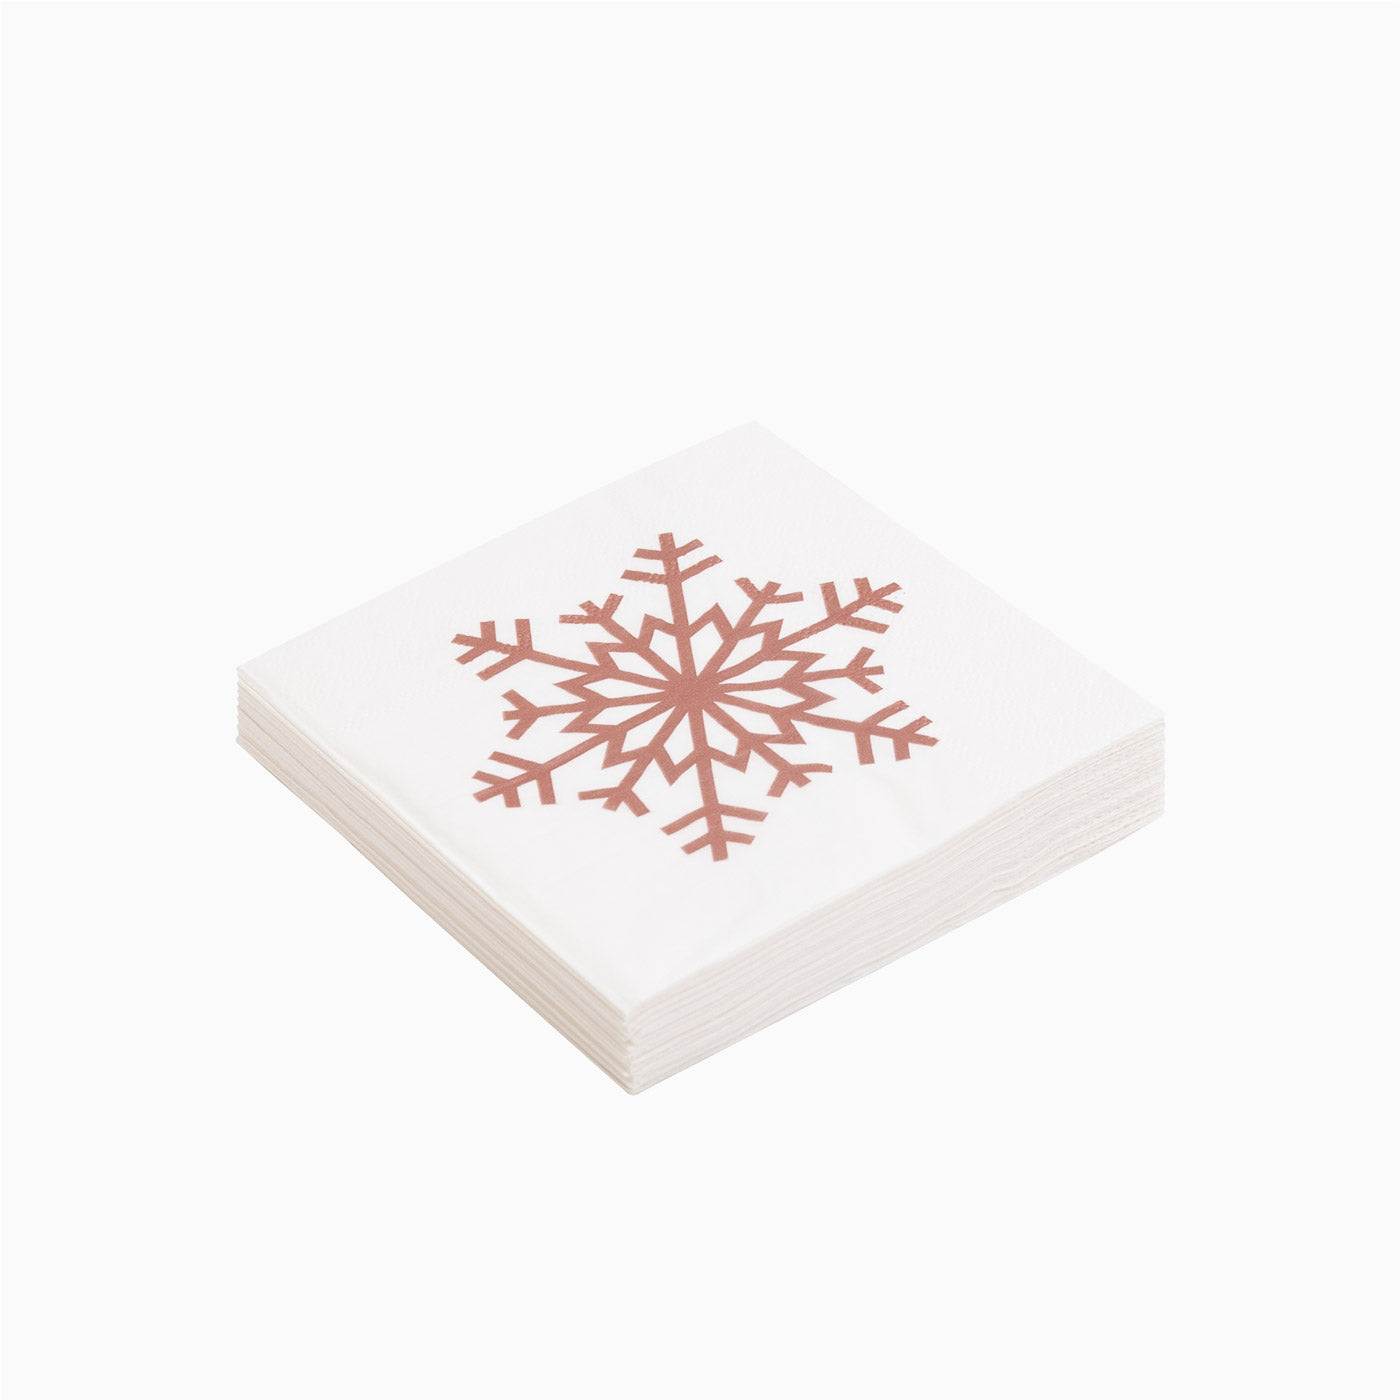 25x25 cm paper napkins Christmas snowflake rose gold